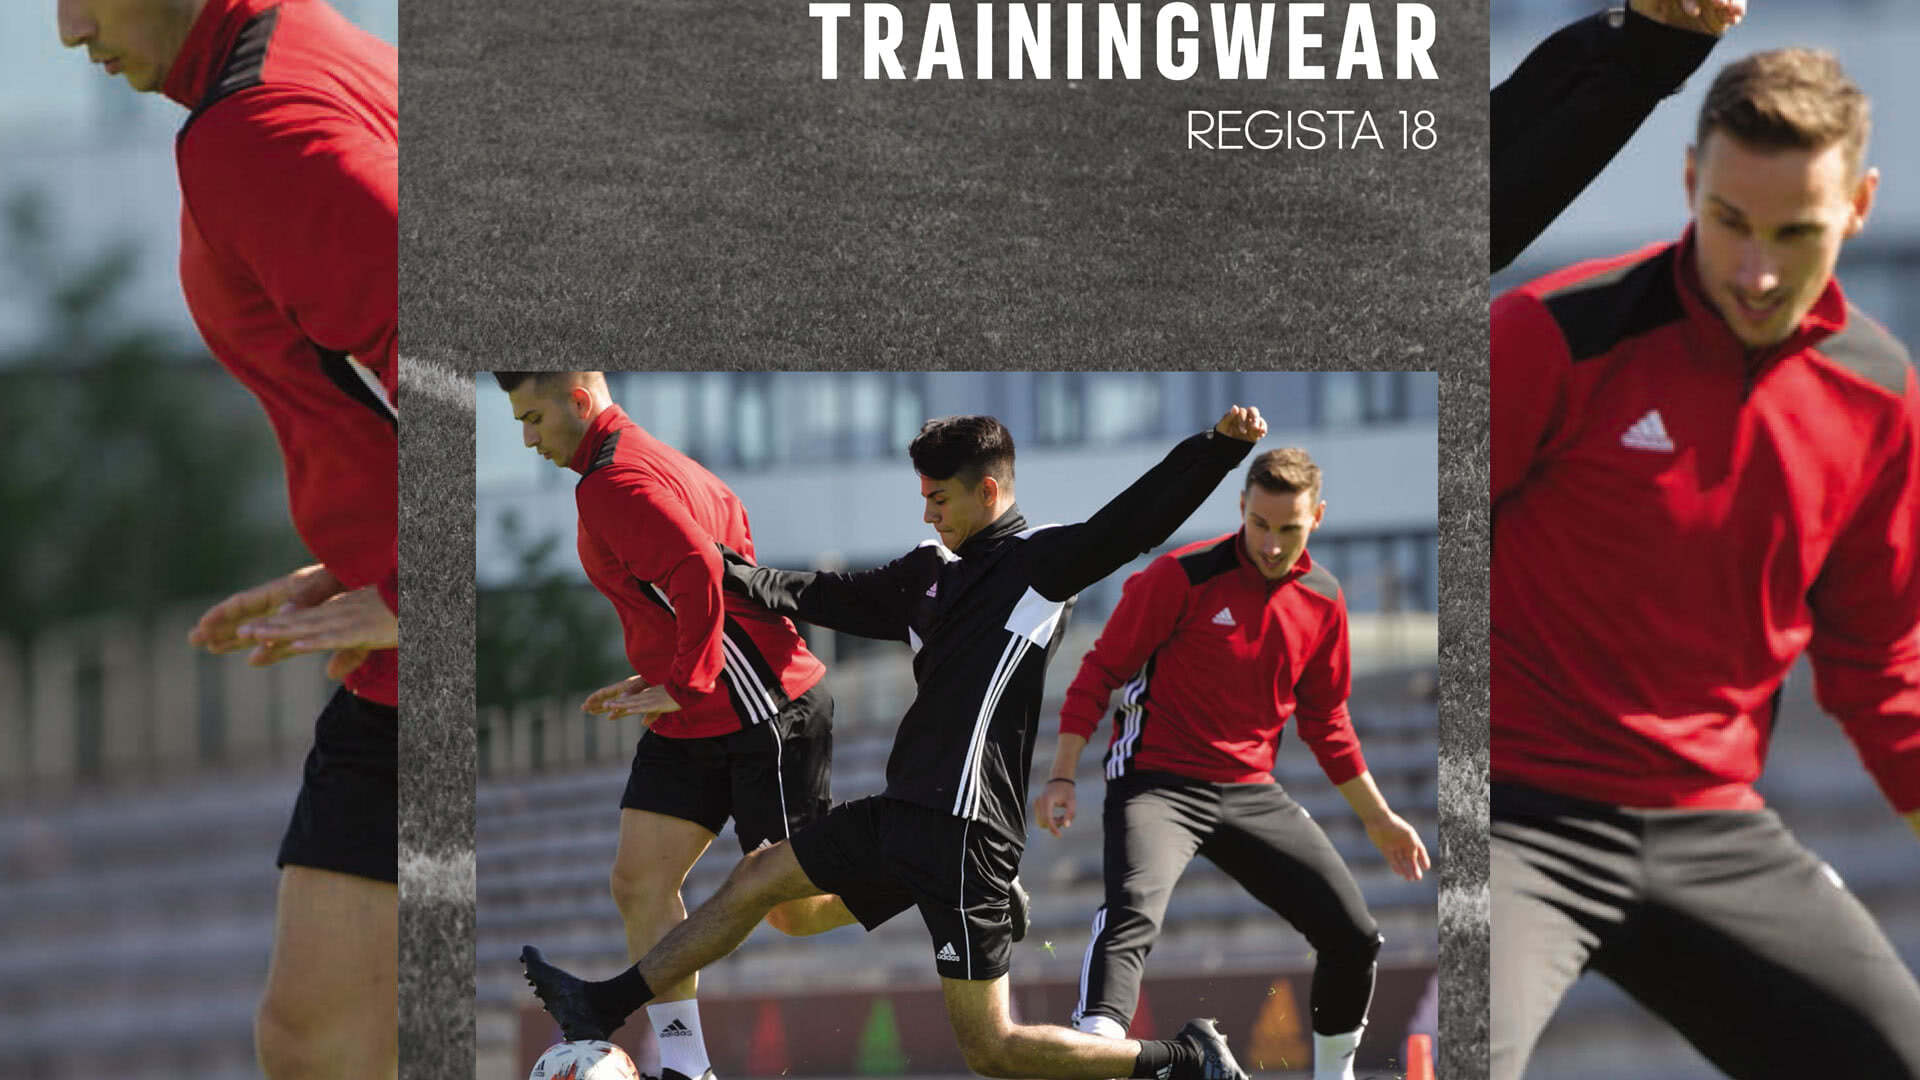 adidas Katalog 2018-2019 Reigsta 18 Trainings Top und Trainingshosen